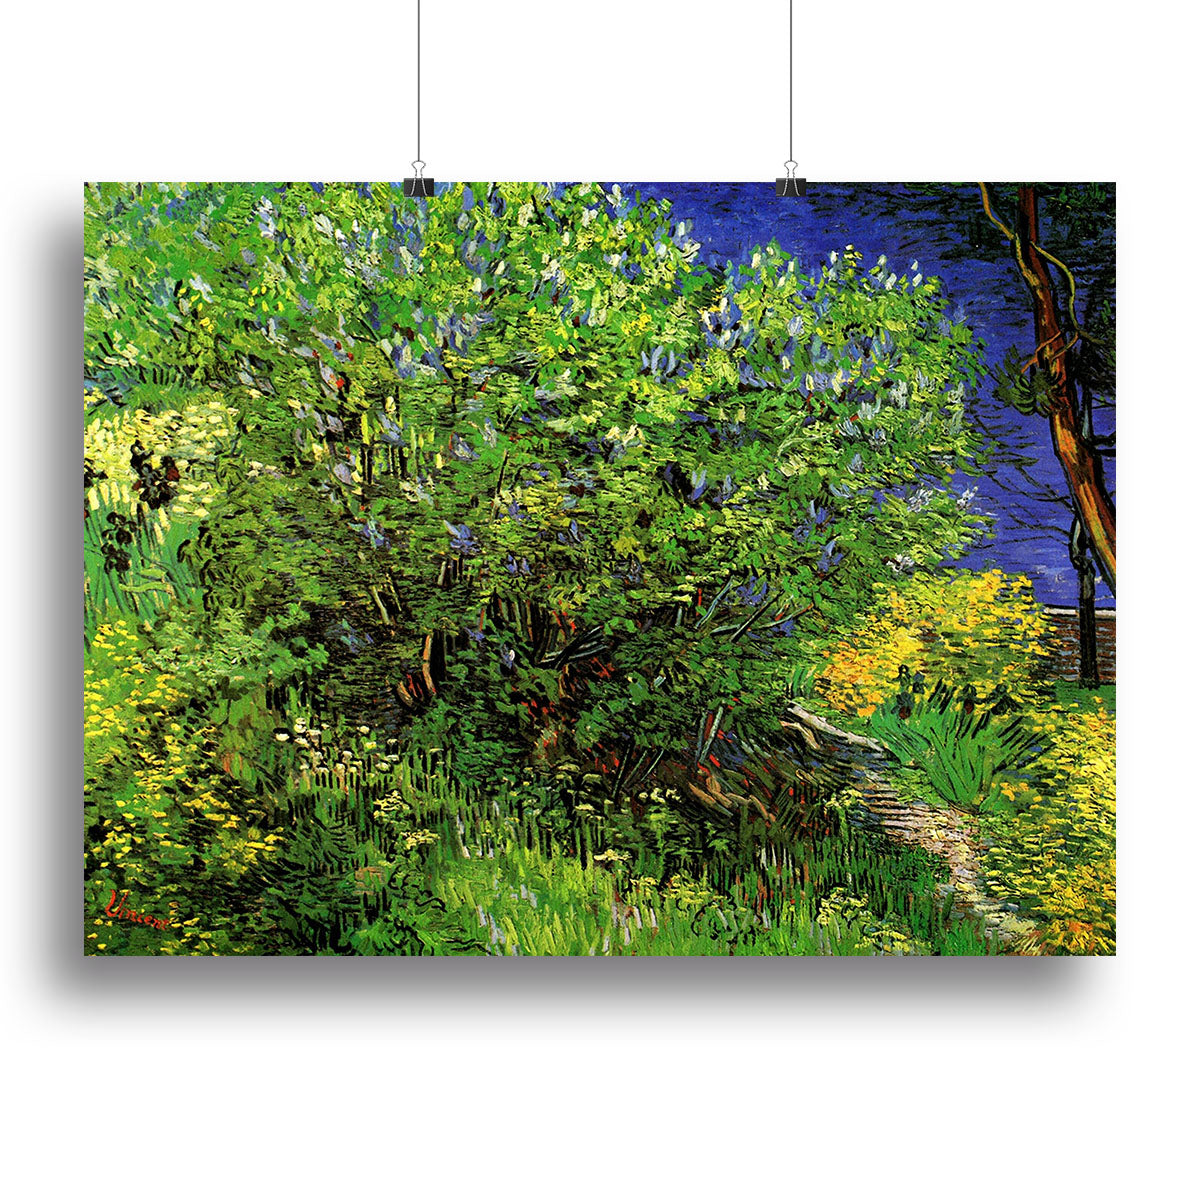 Lilacs by Van Gogh Canvas Print or Poster - Canvas Art Rocks - 2